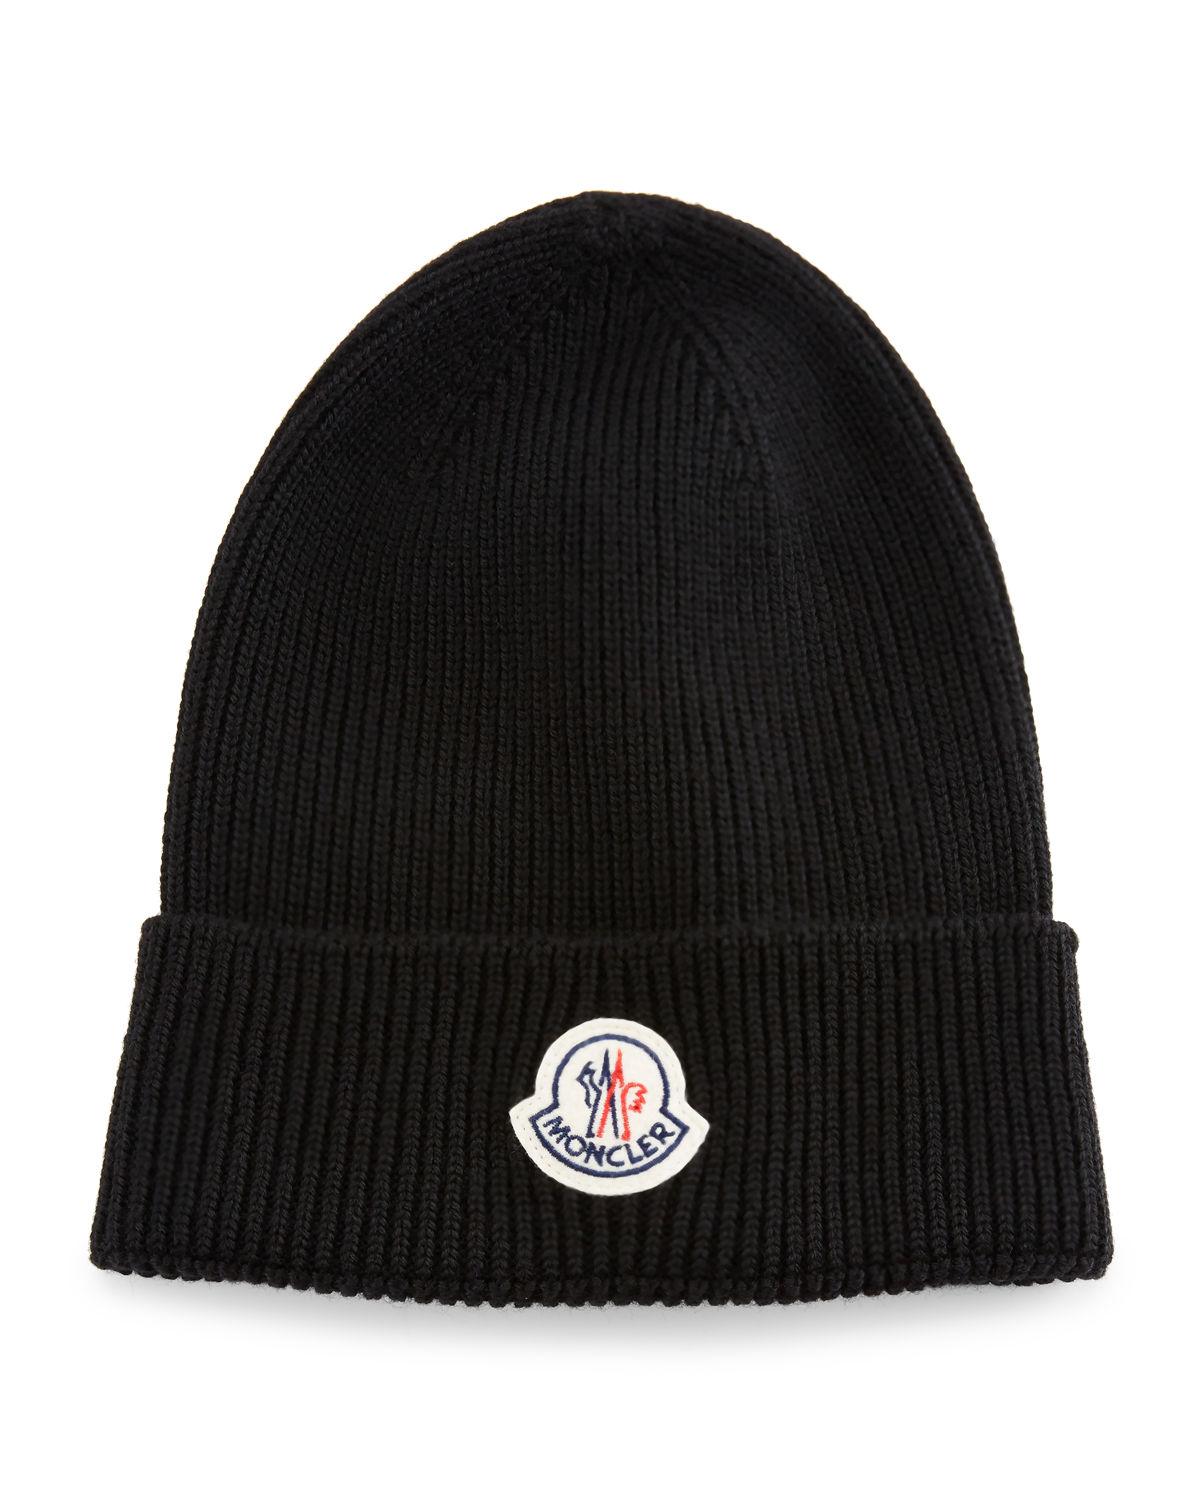 Moncler Wool Woven Hat in Navy (Black) for Men - Lyst